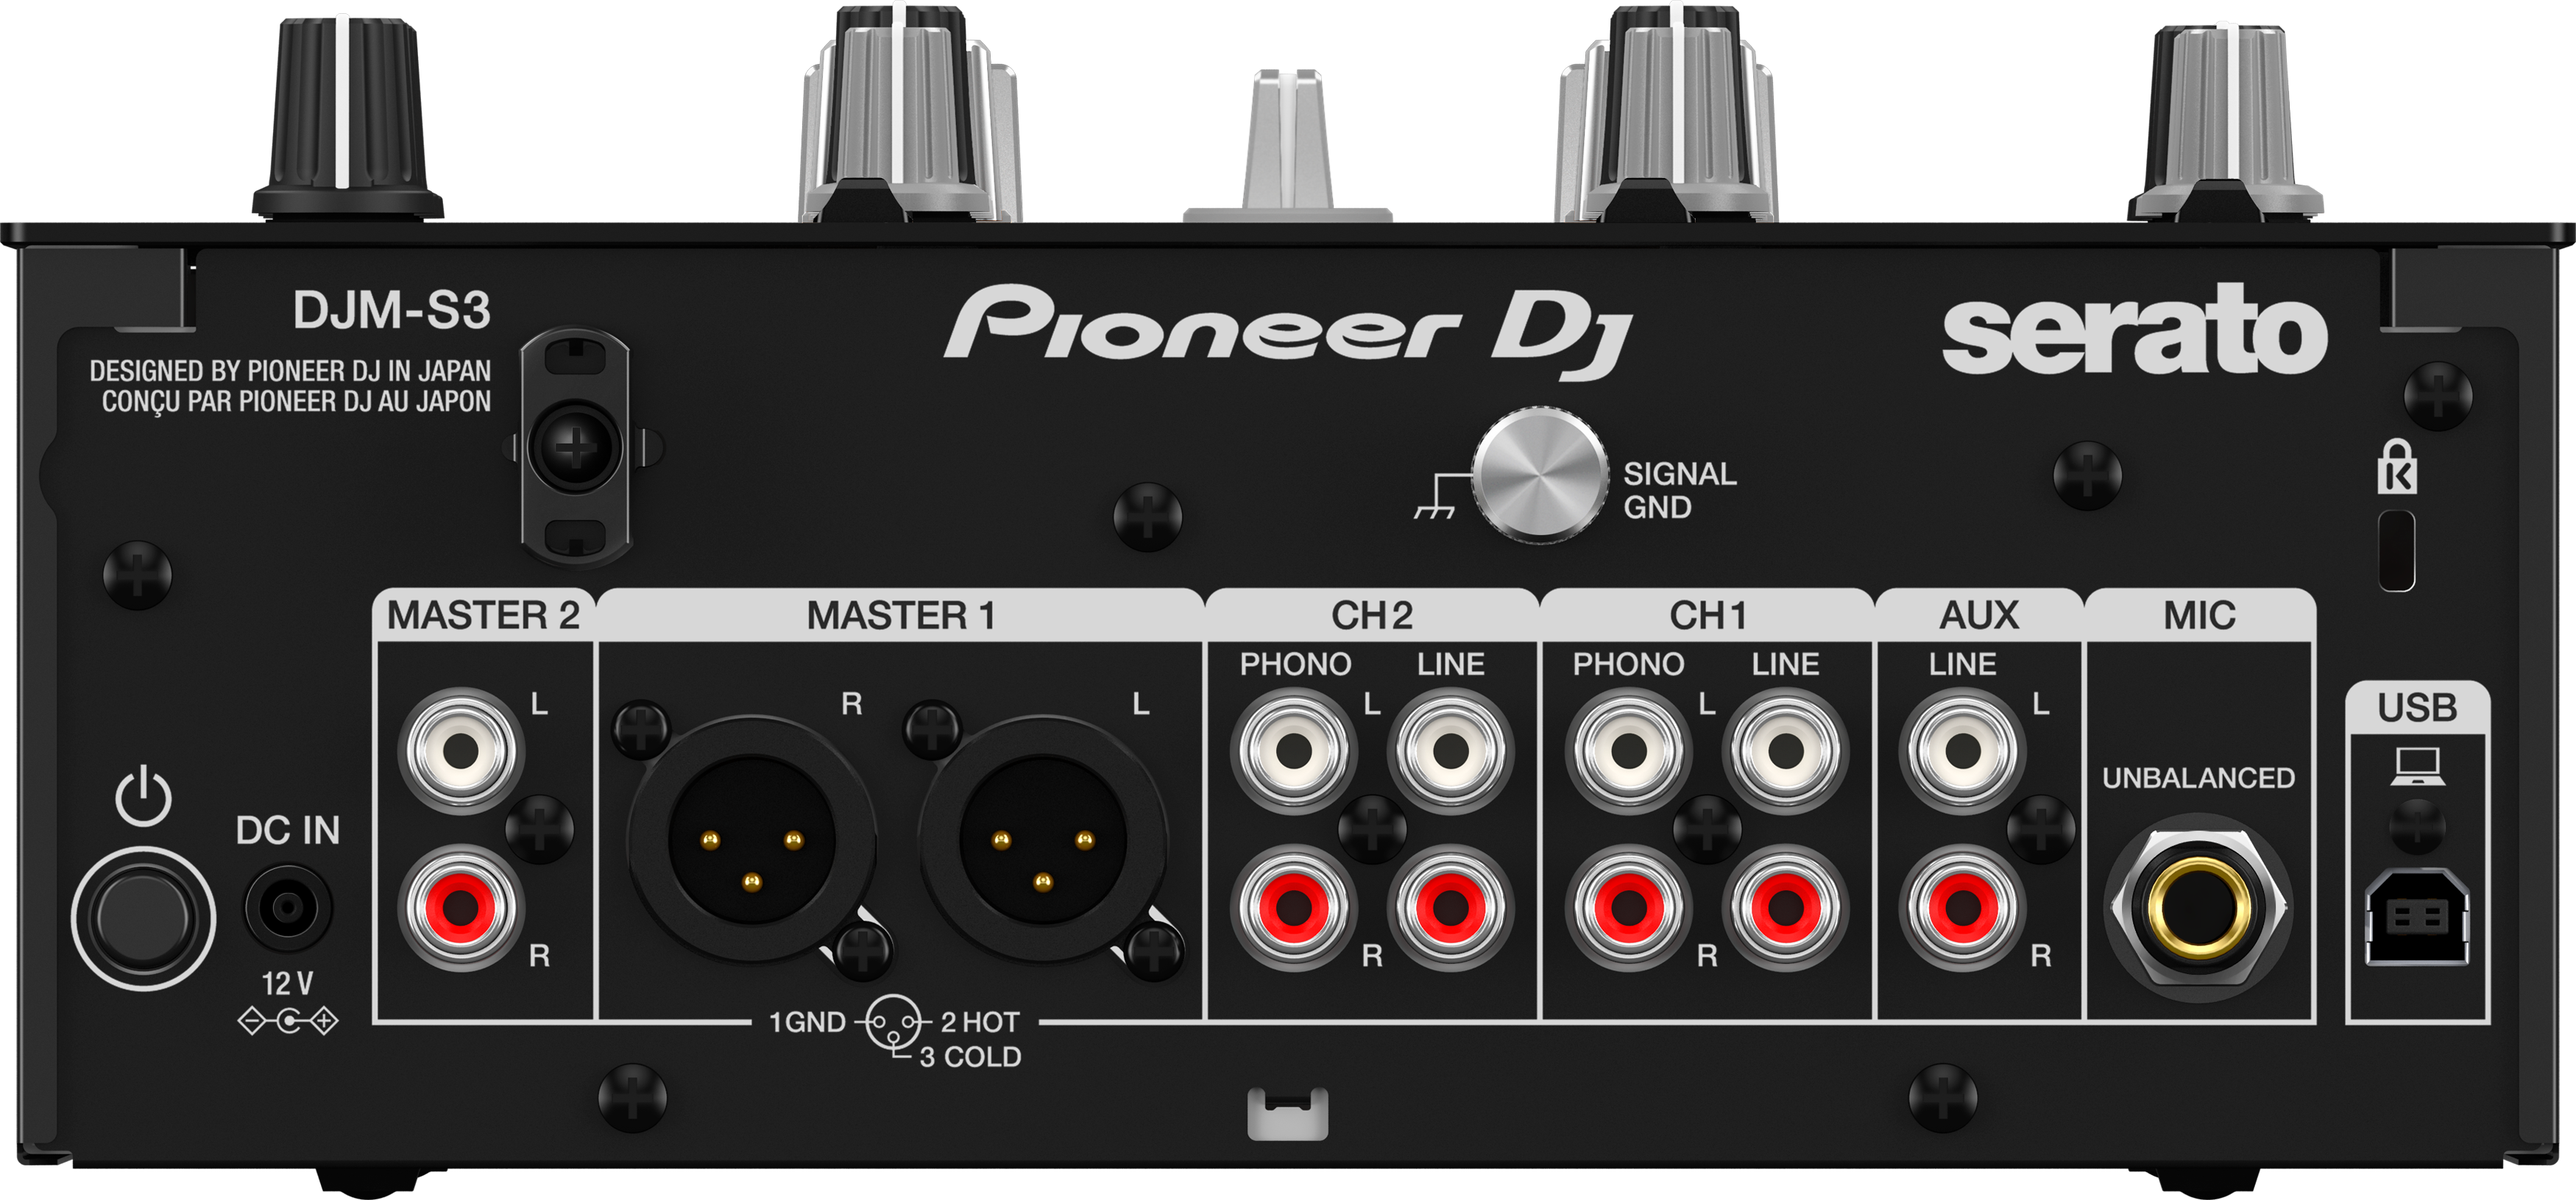 Pioneer Dj Djm-s3 - DJ mixer - Variation 1